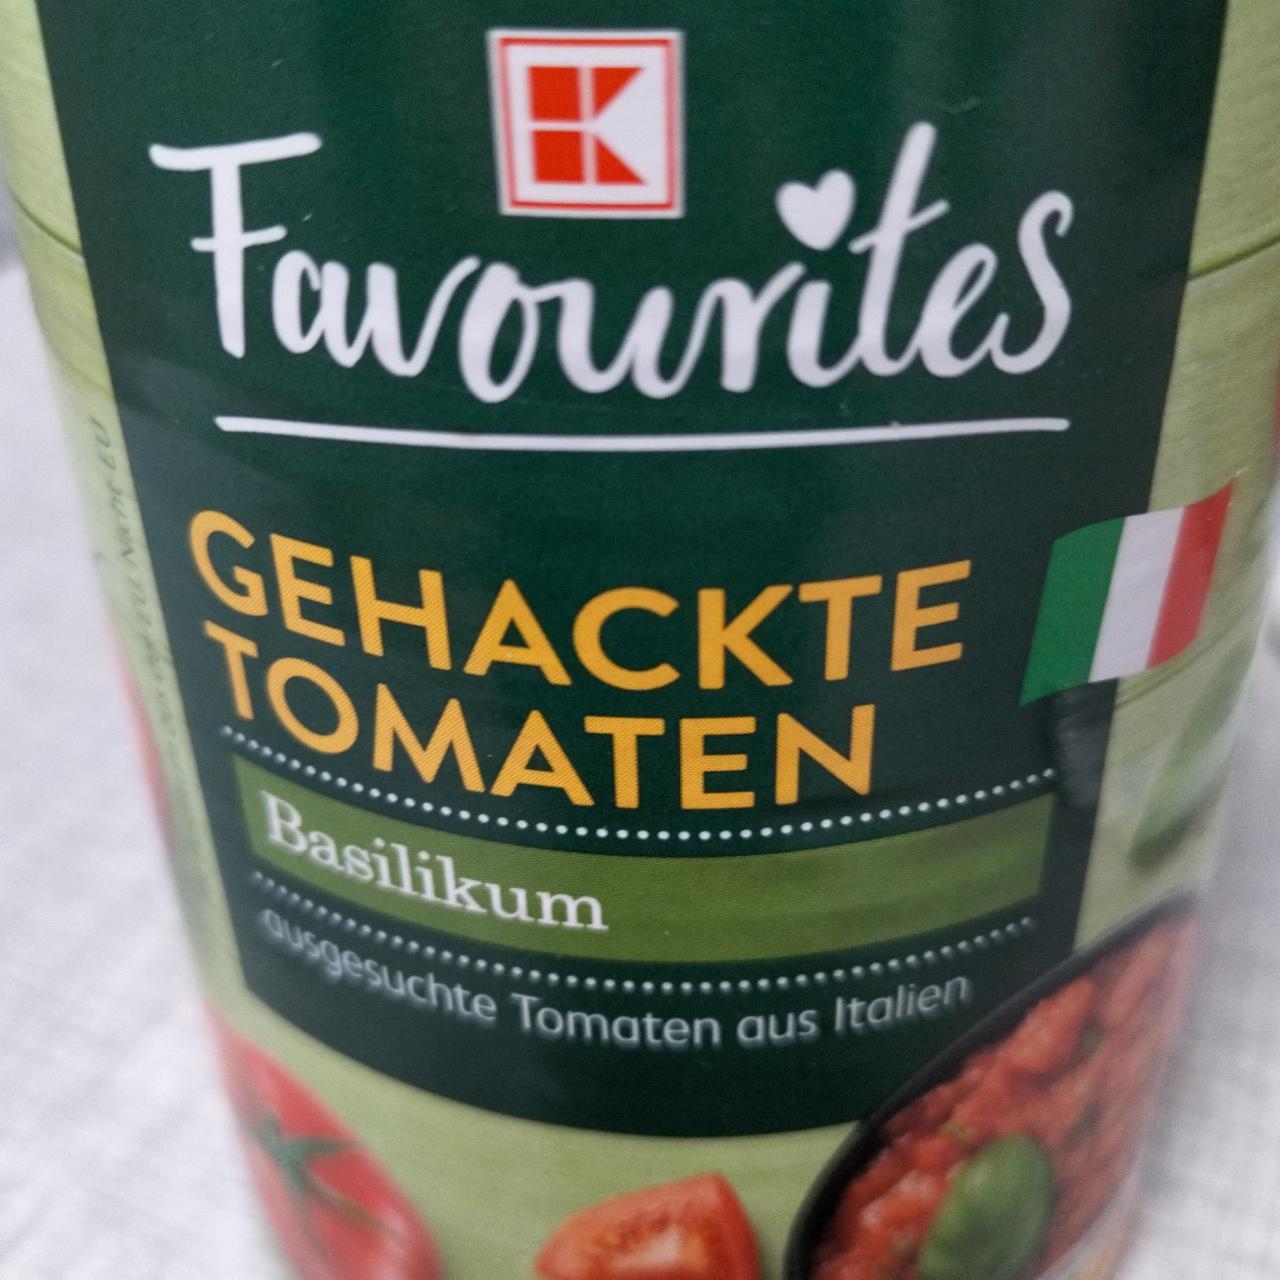 Фото - Genackte tomaten Favourites